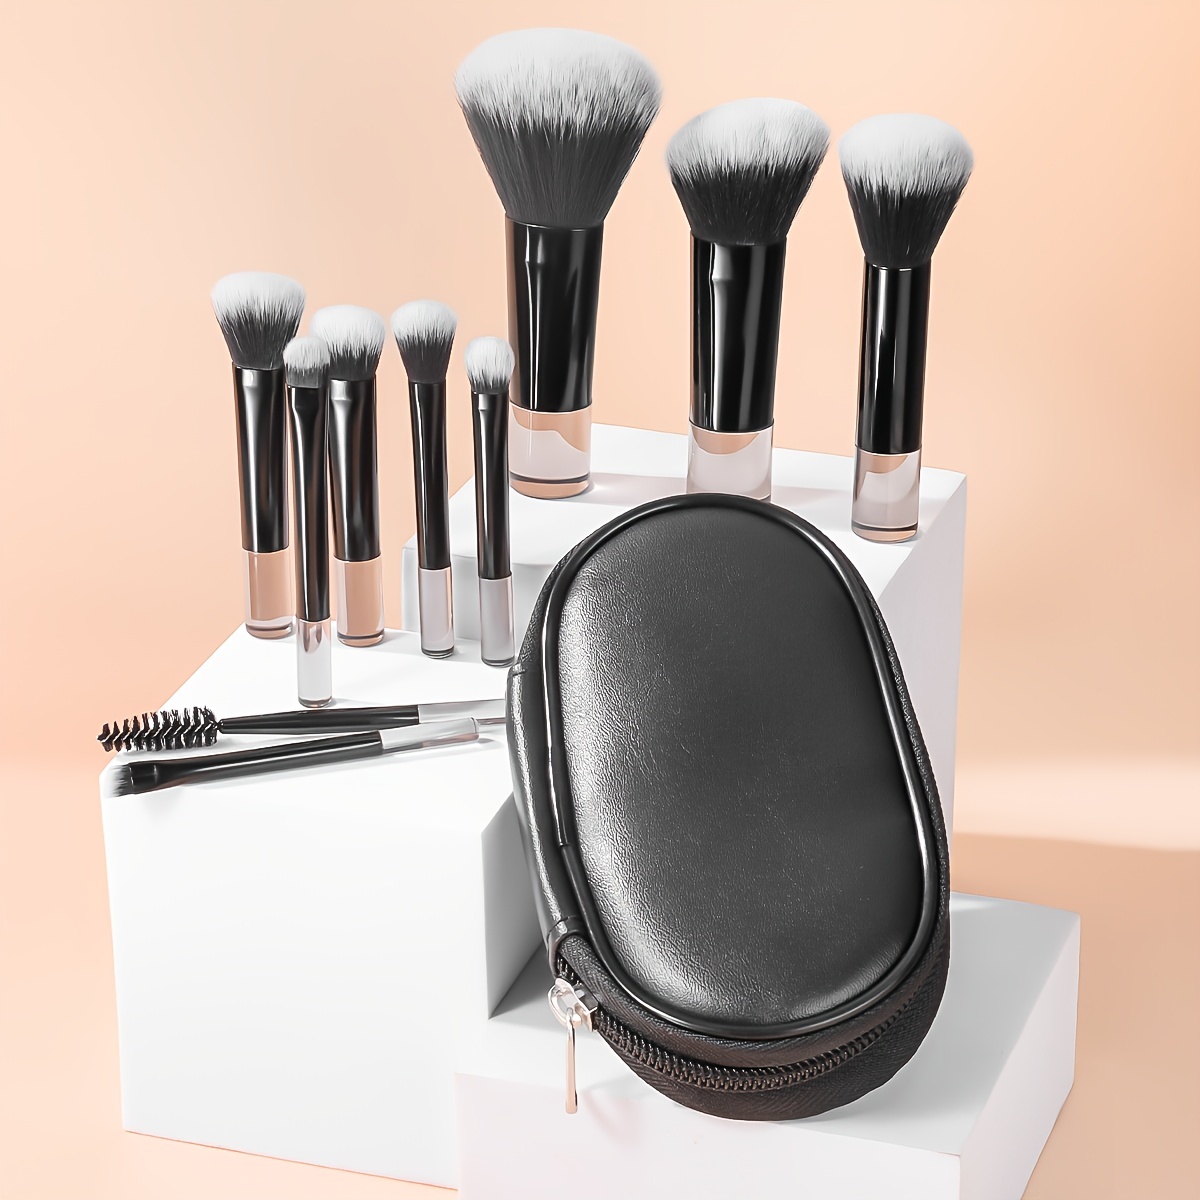 

10pcs Mini Makeup Brush Set With Travel Portable Case, Professional Blending Makeup Brushes For Concealer Eyeshadow Blush Powder Foundation, Gift For Women - Black